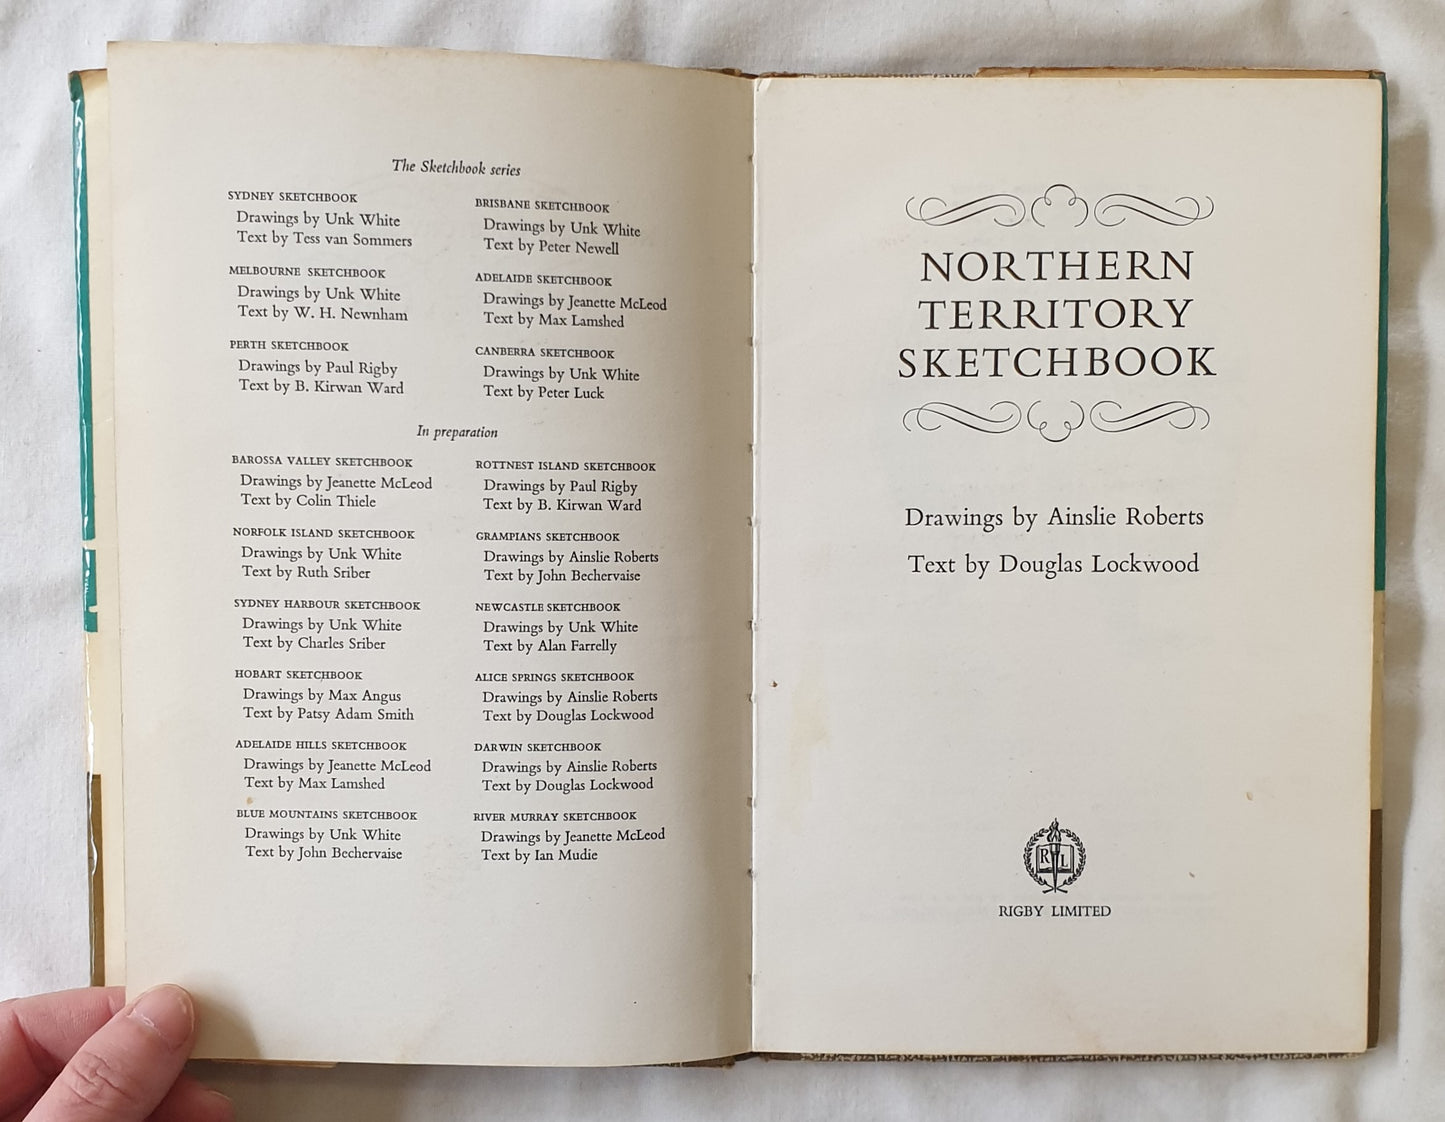 Northern Territory Sketchbook by Ainslie Roberts and Douglas Lockwood